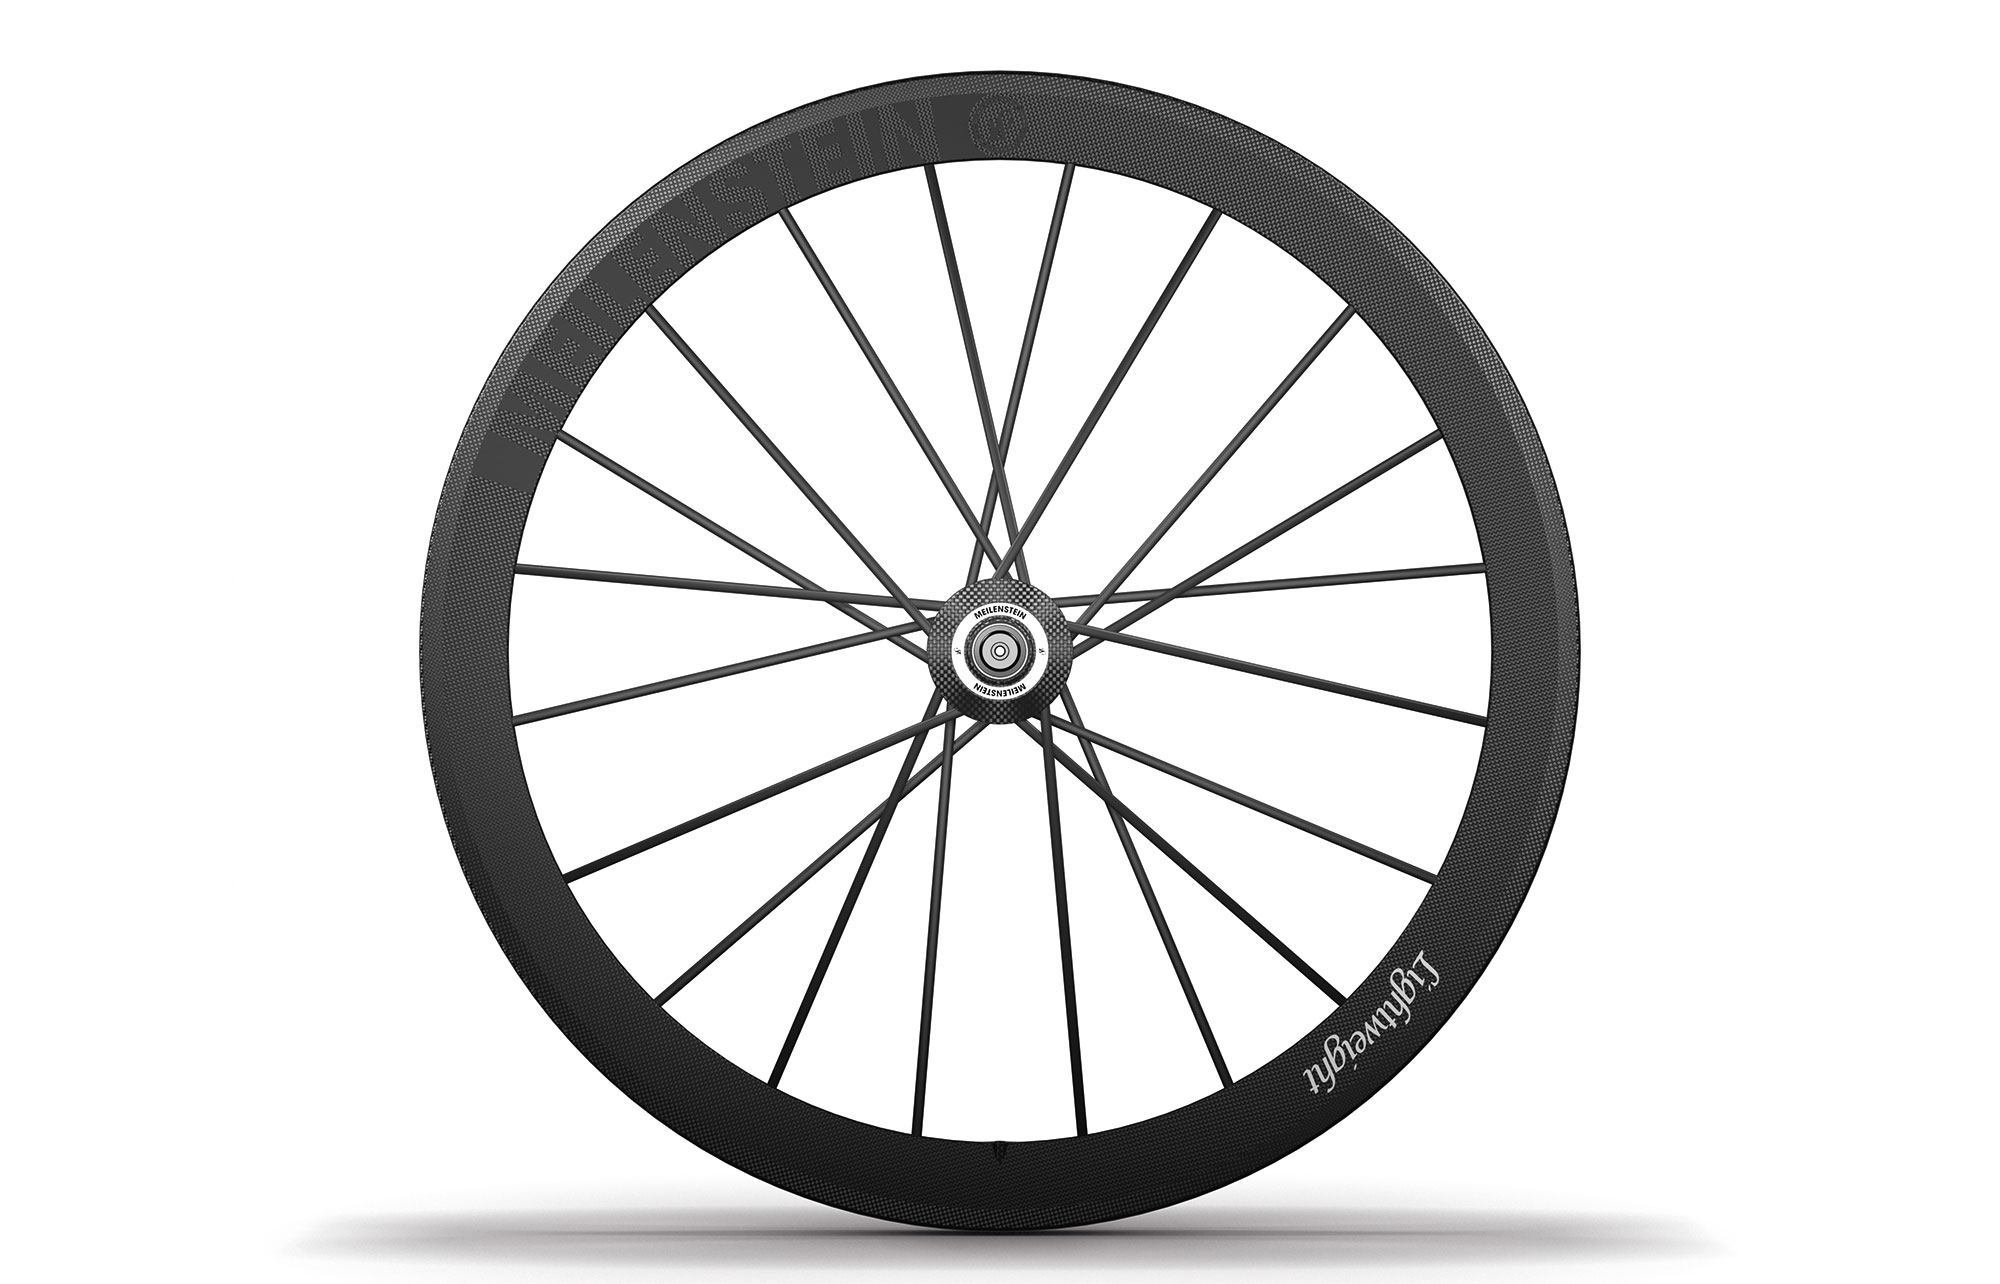 Lightweight Meilenstein Tubular Rear Wheel | cycling wheel